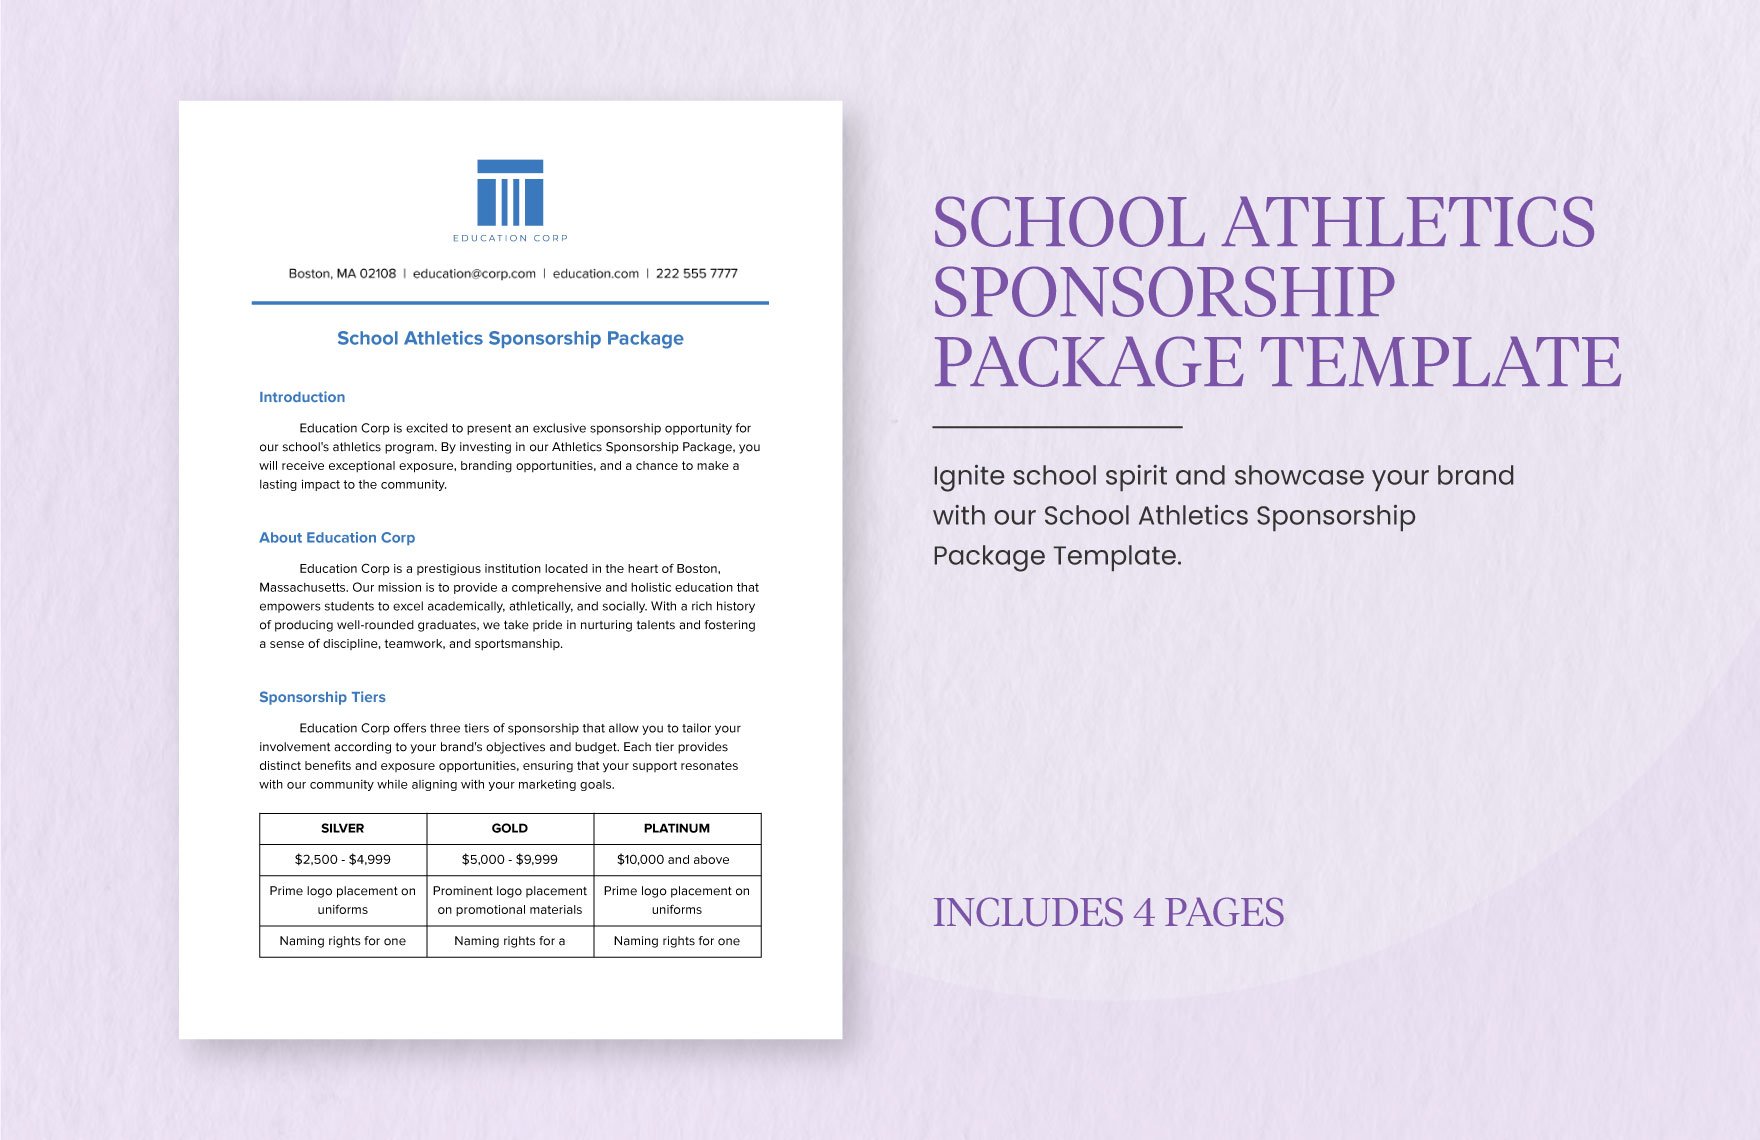 School Athletics Sponsorship Package Template